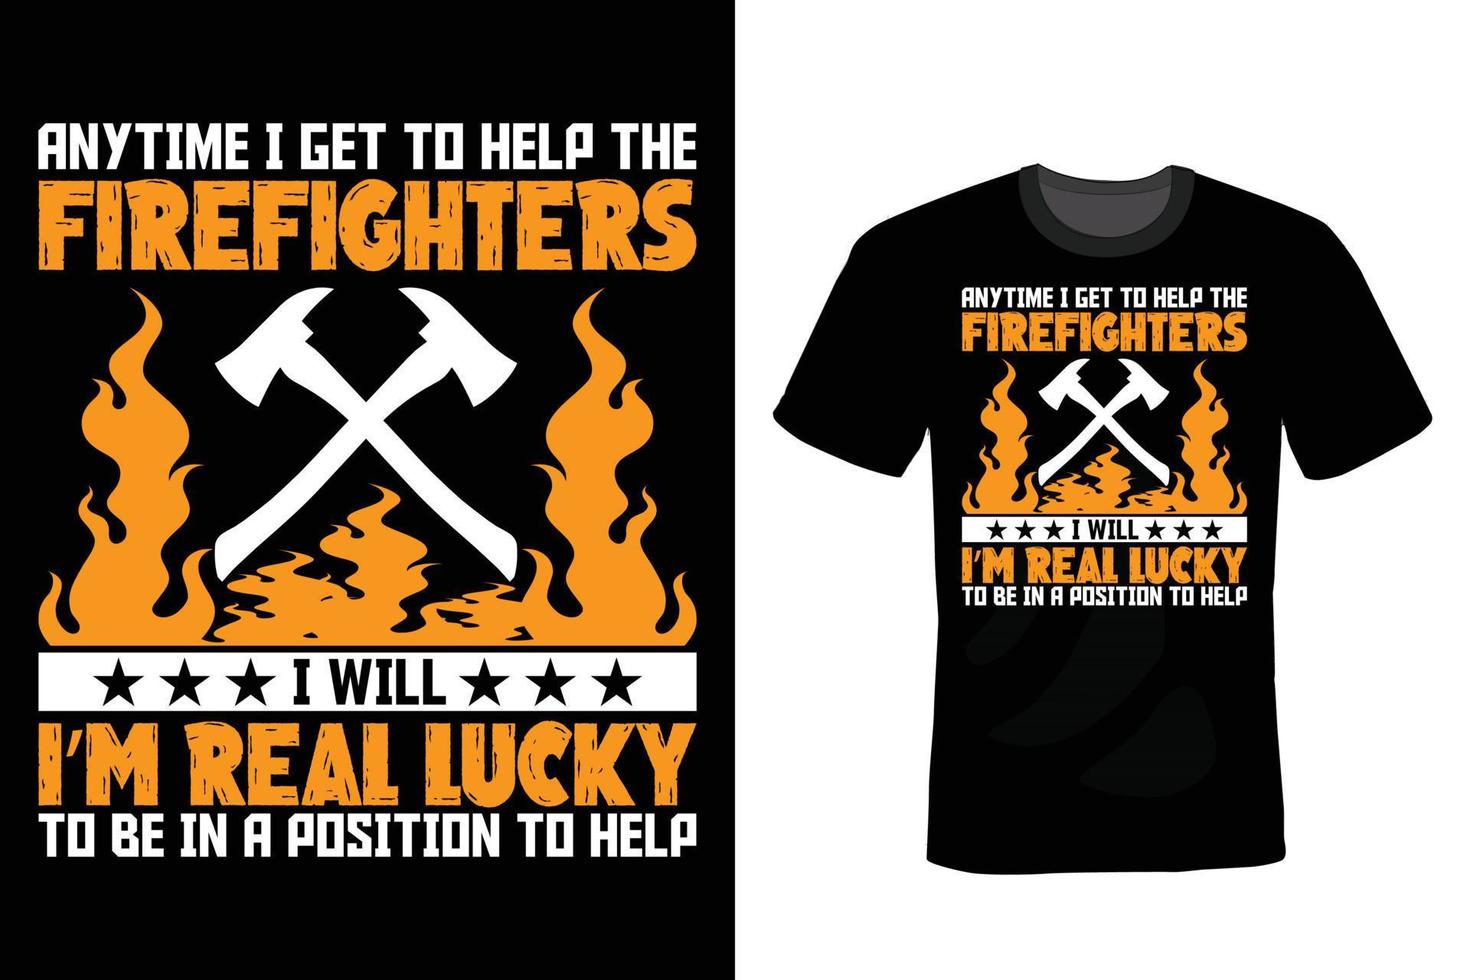 brandweerman t-shirt ontwerp, vintage, typografie vector